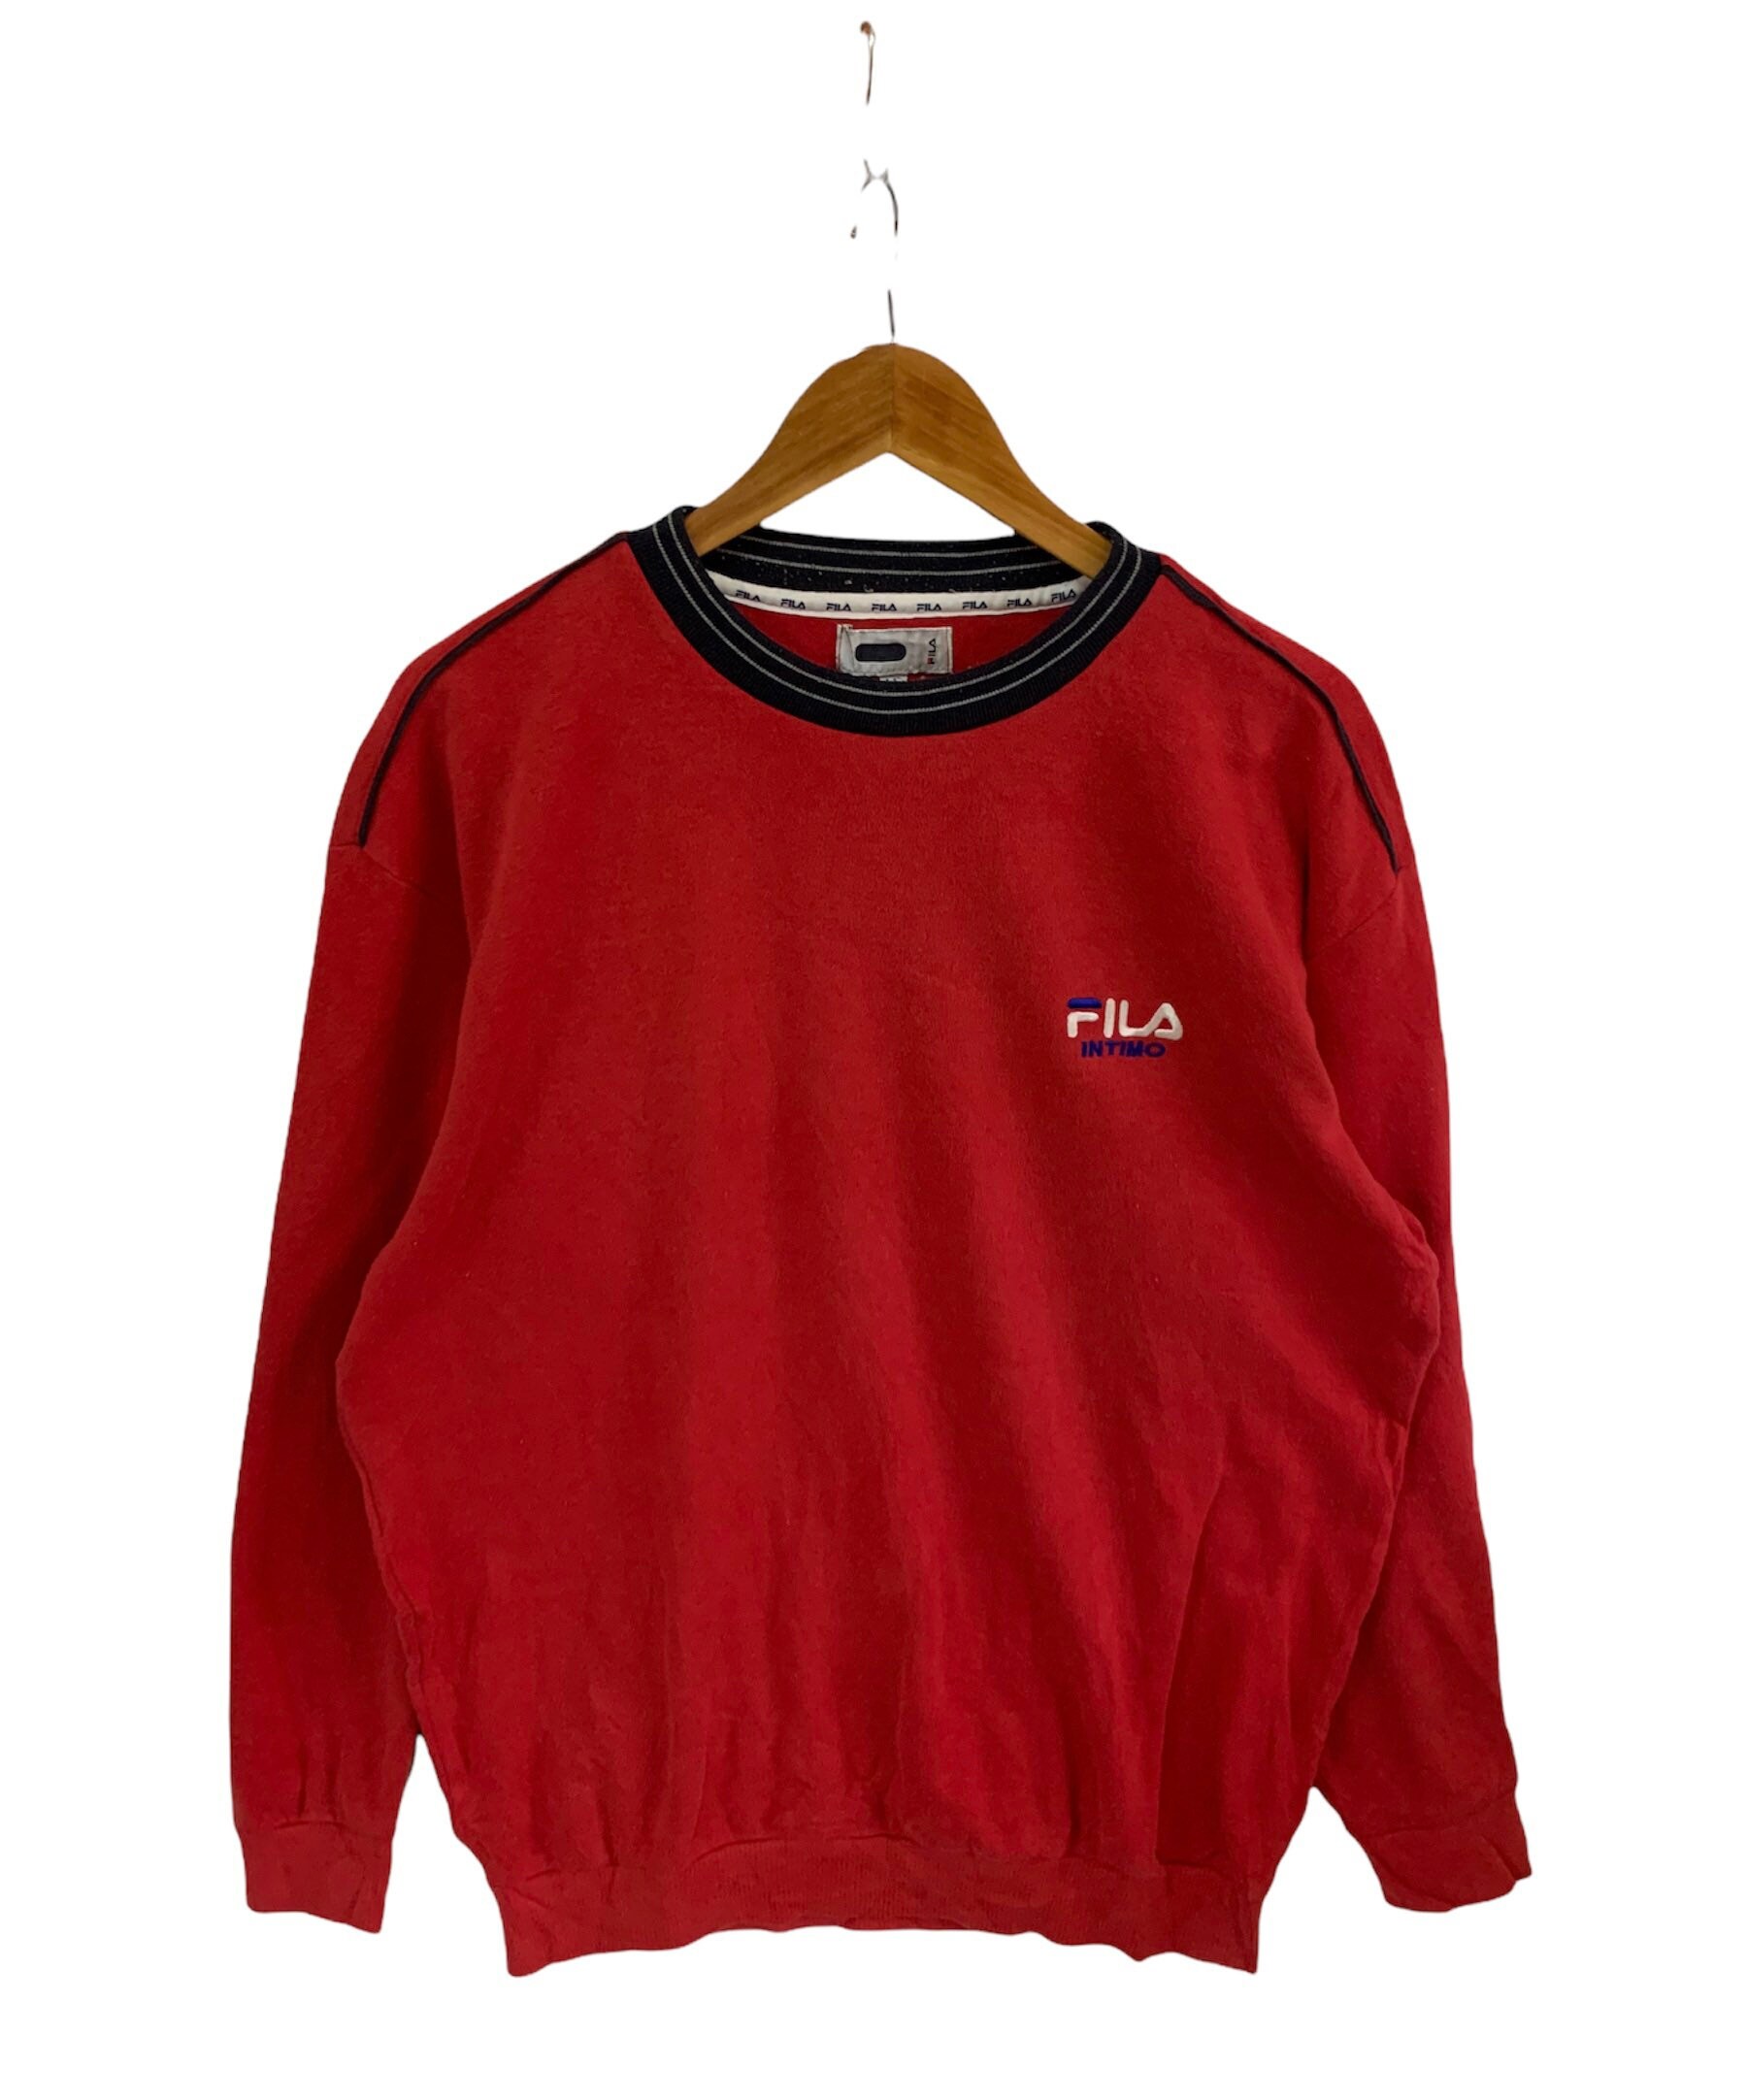 Vintage 90Er Jahre Fila Intimo Sweatshirt Big Logo Pullover Rot Große Größe von FongfongStudio